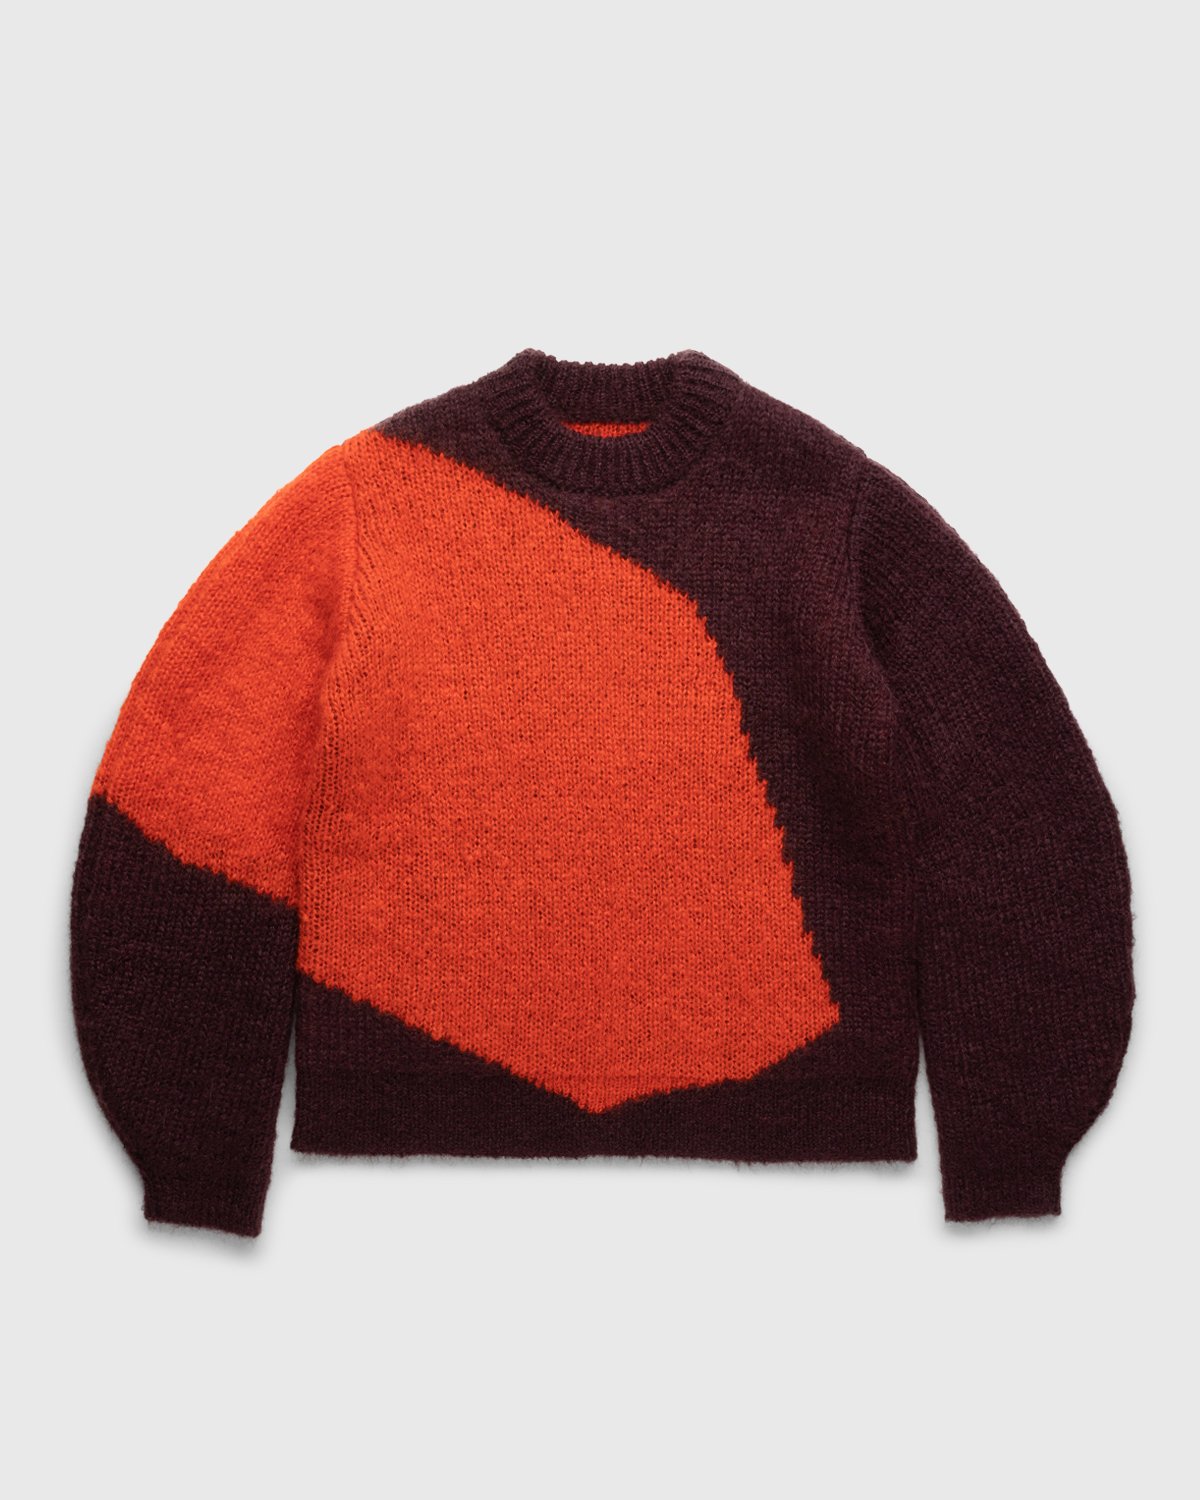 Jil Sander – Sweater Knitted Open Red | Highsnobiety Shop